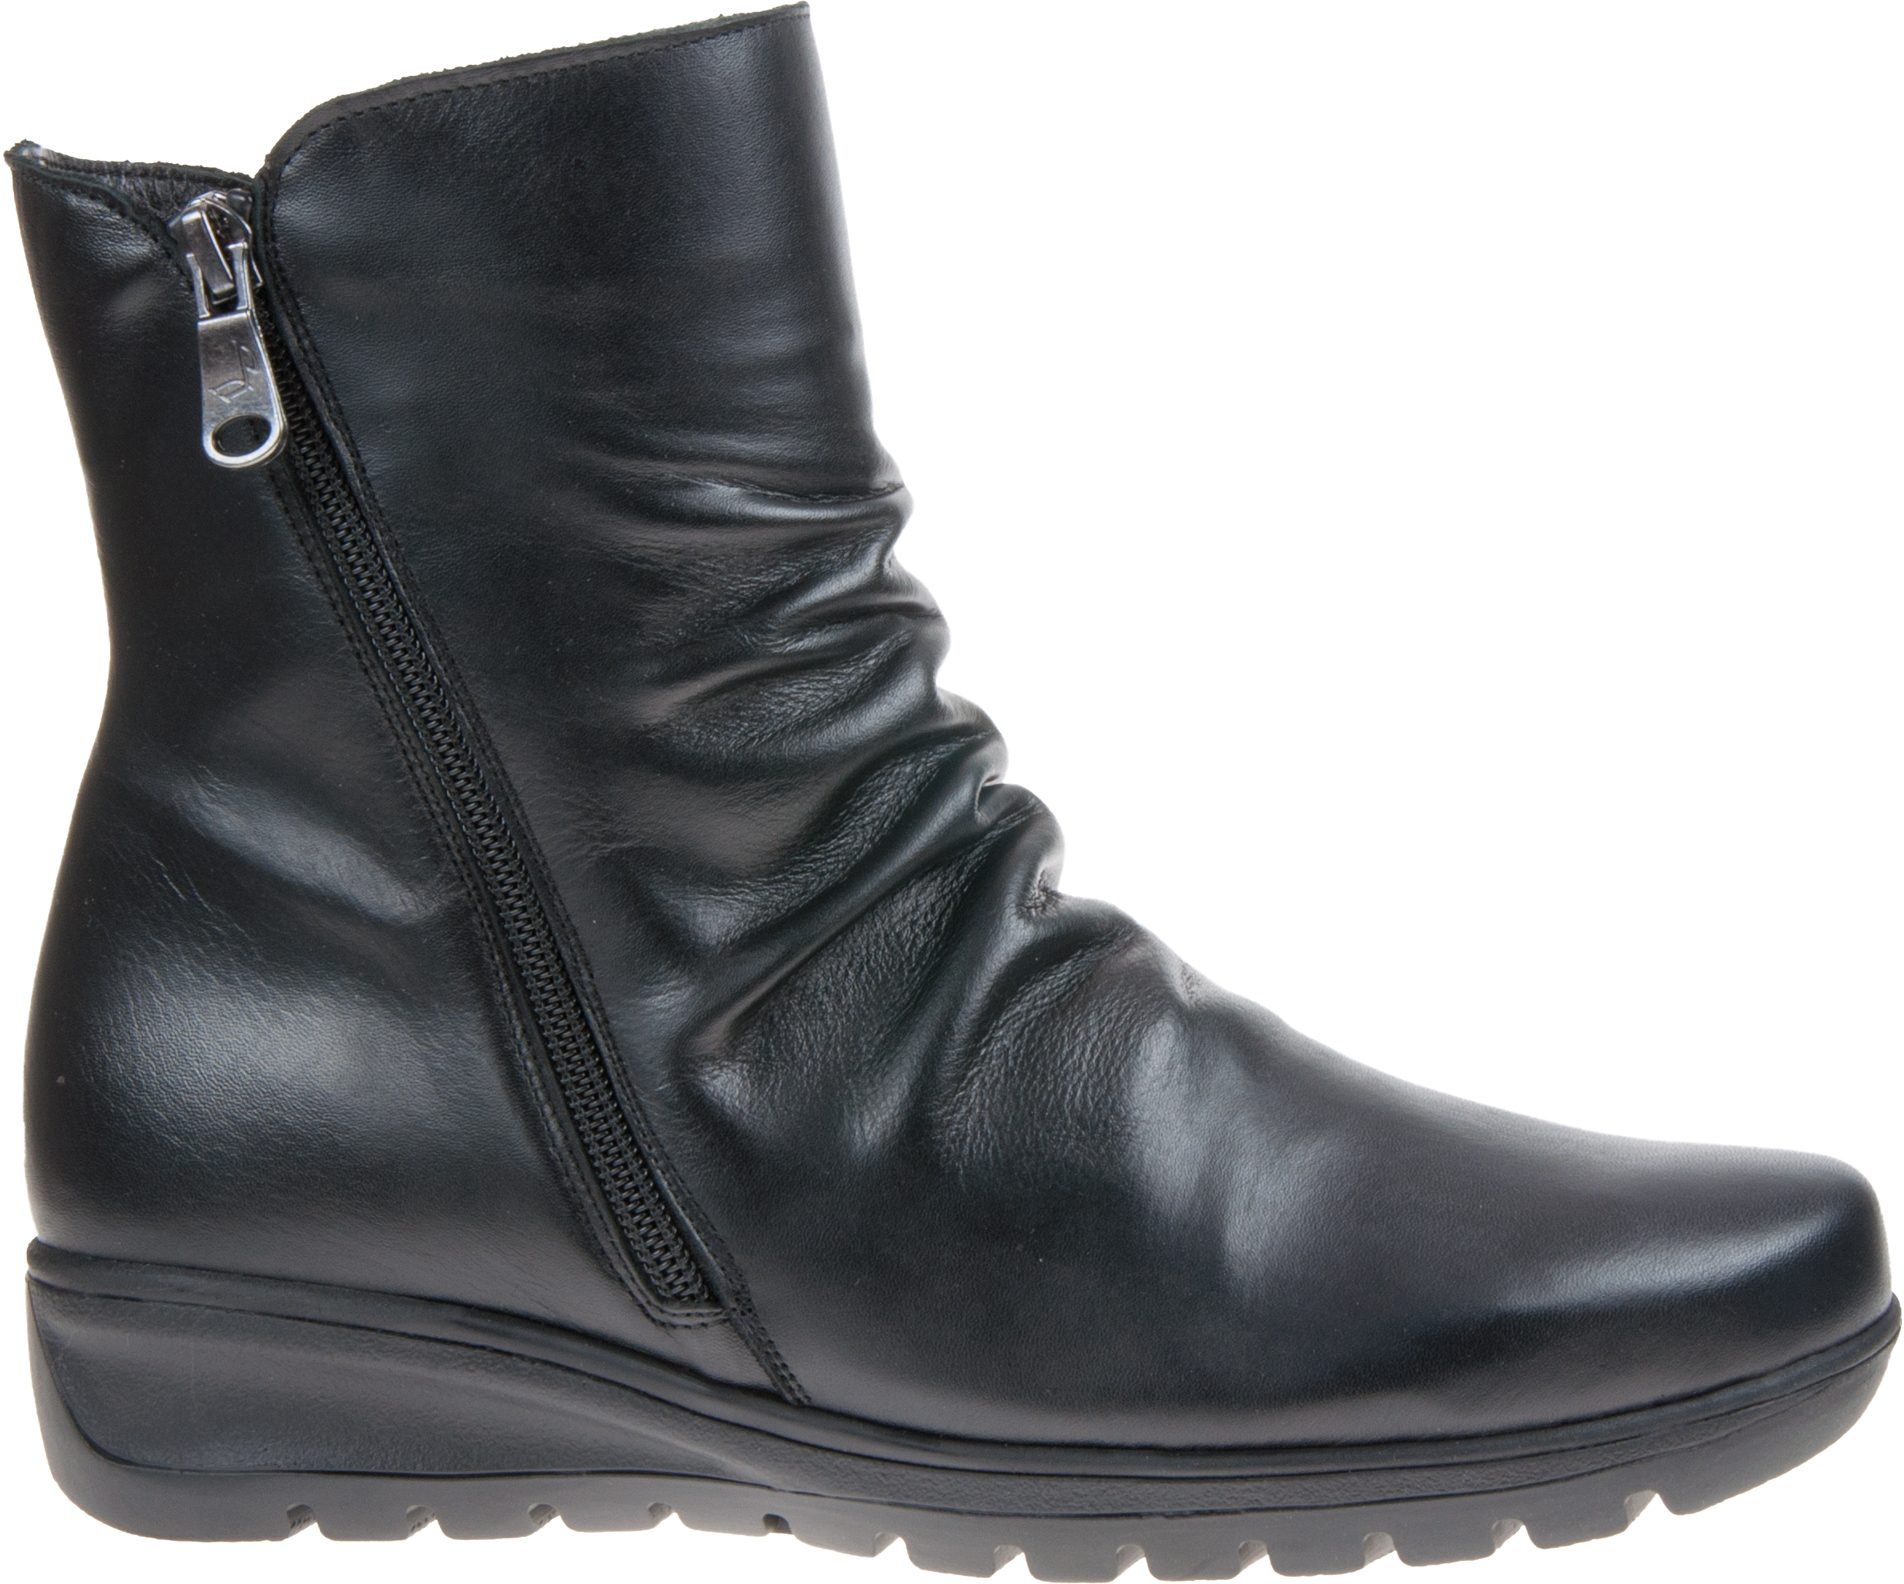 Paula Urban Botin 258 Black 258 - Ankle Boots - Humphries Shoes